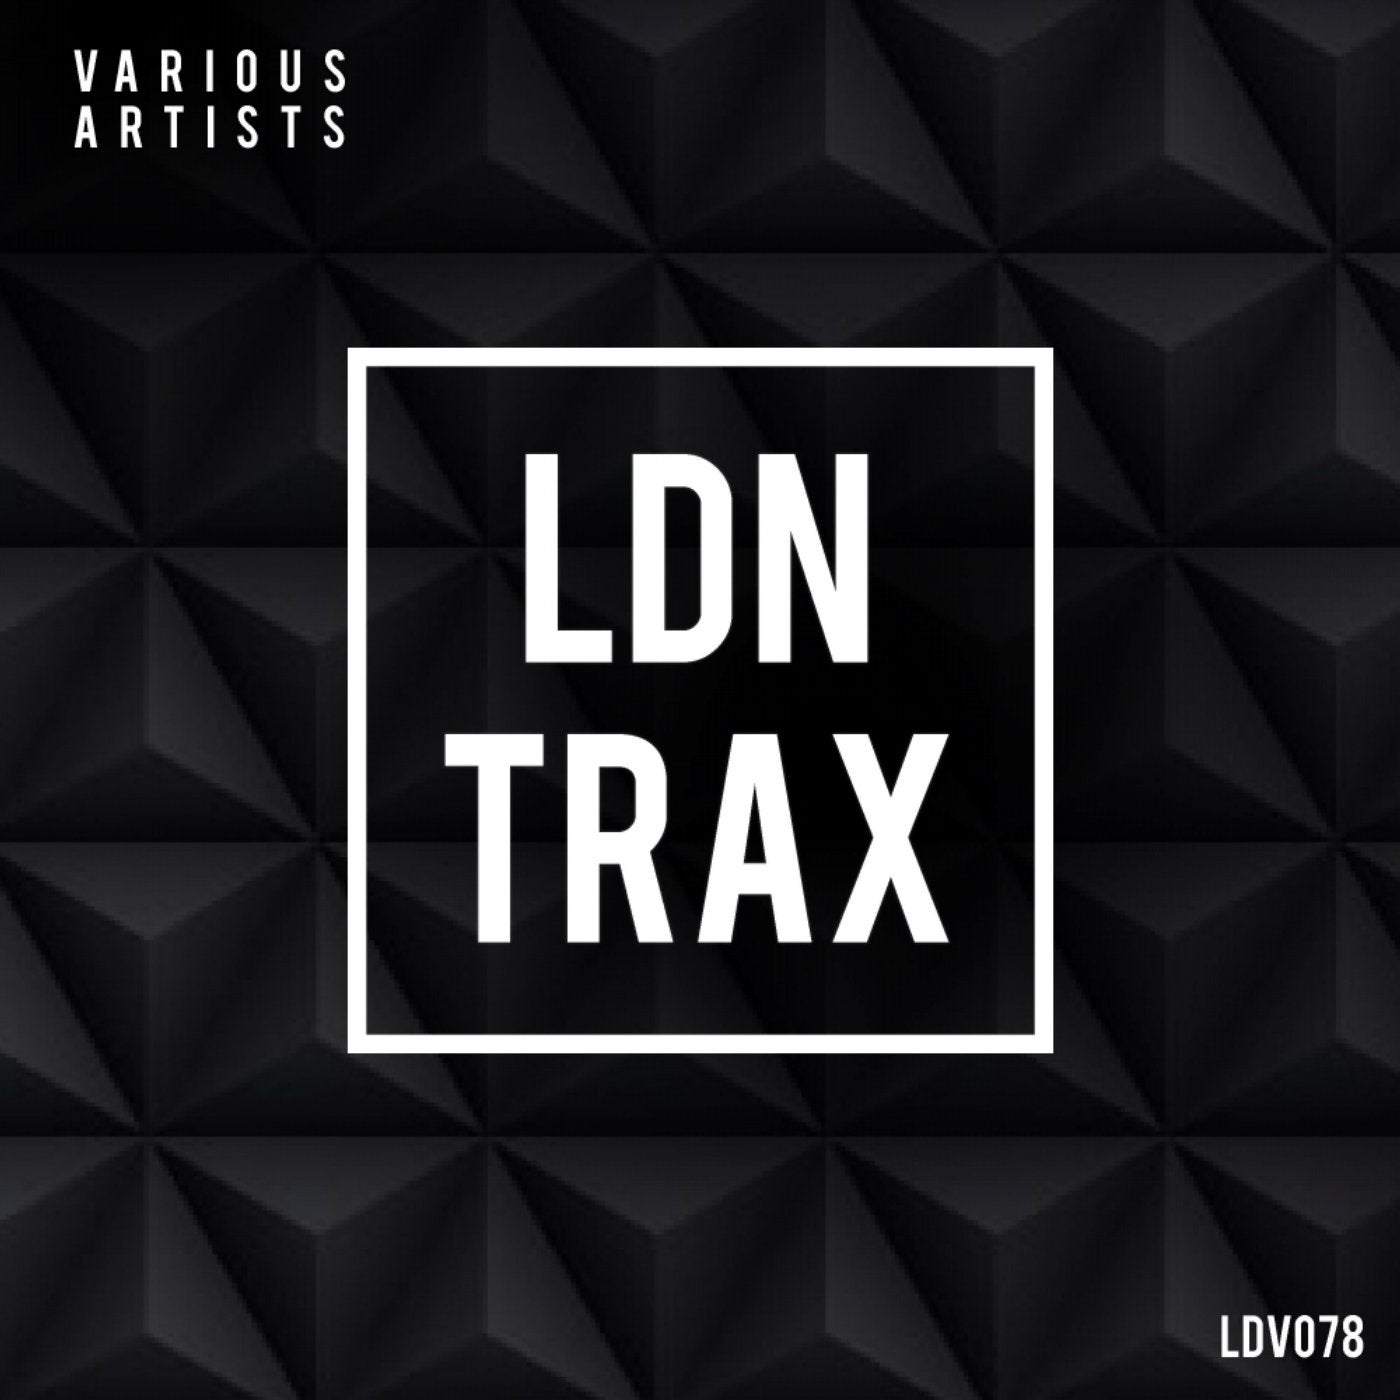 LDN Trax Various Artists